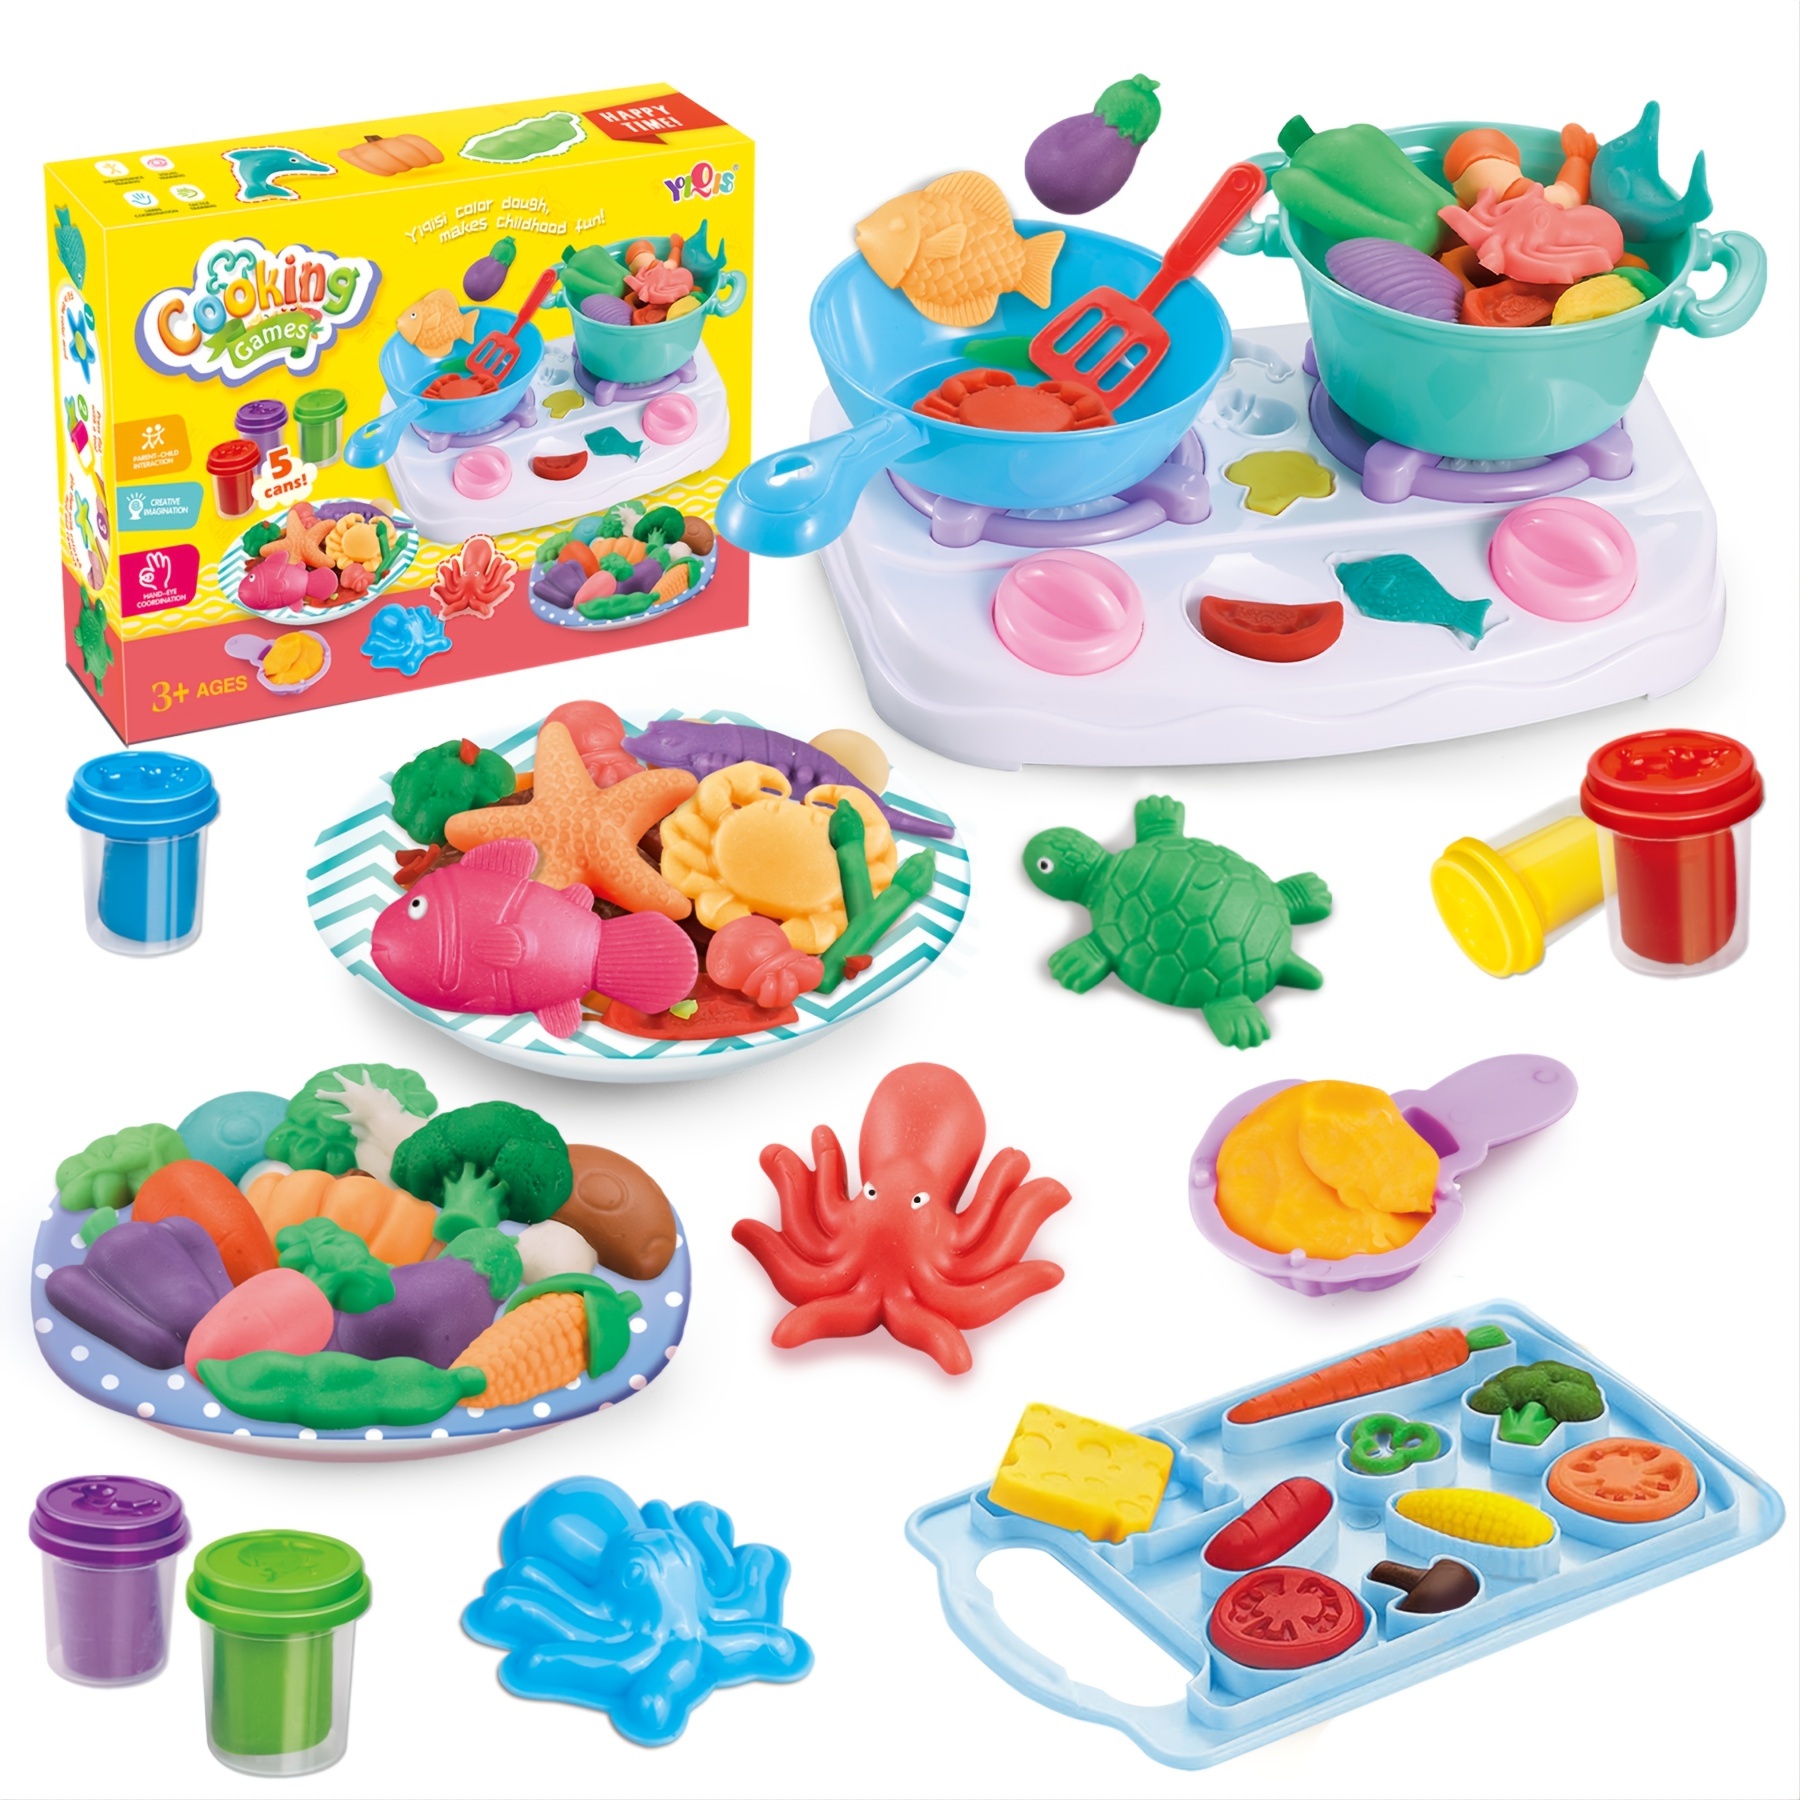 Play Dough Tools for Kids, 20 PCS Playdough Tools Kit Include